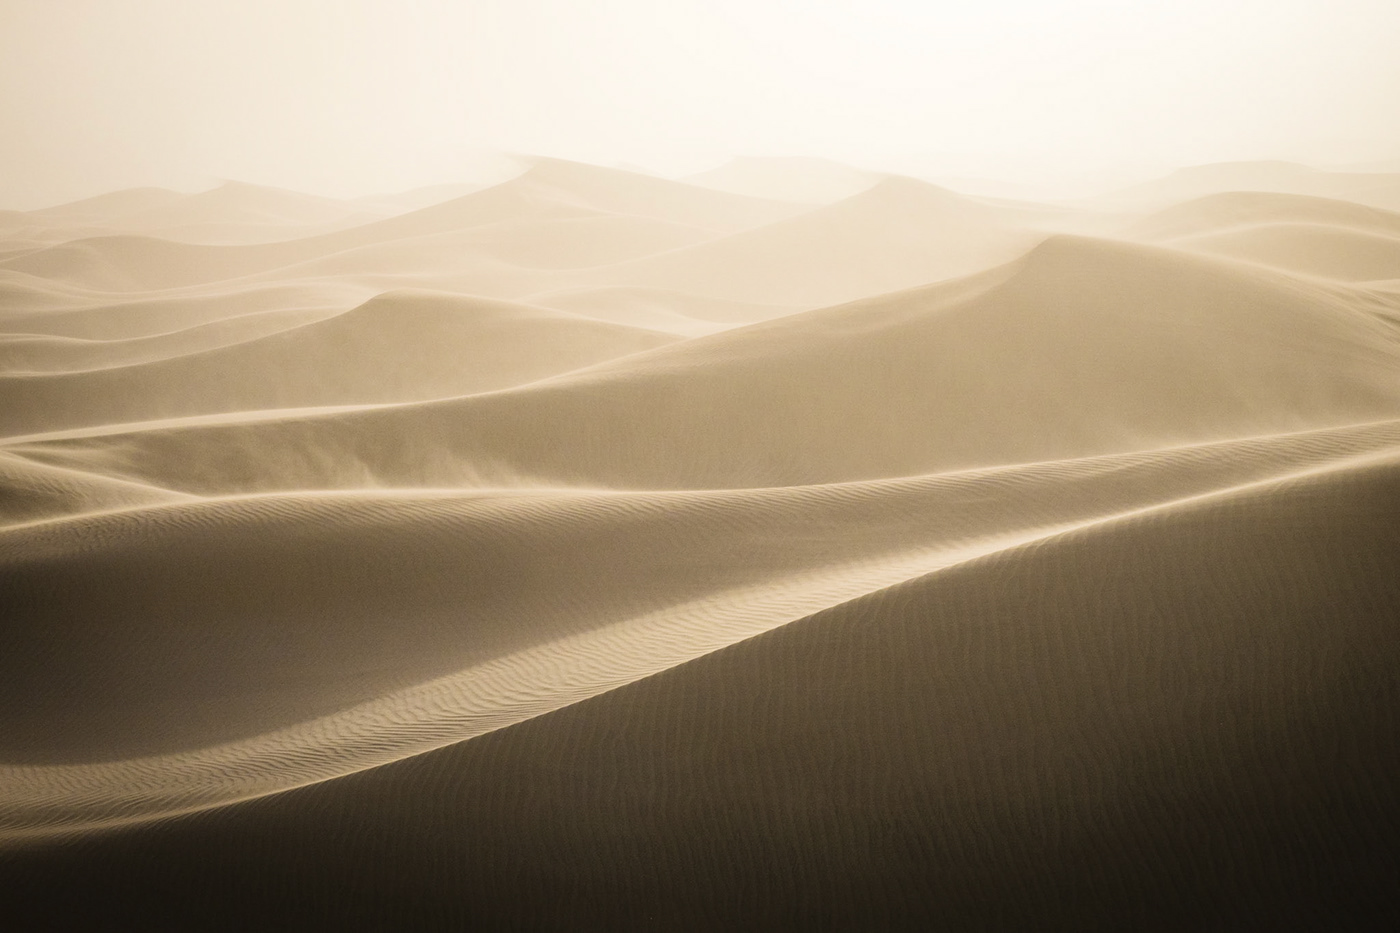 Sandstormes in the dunes of the Mesquite Sand Dunes, Death Valley